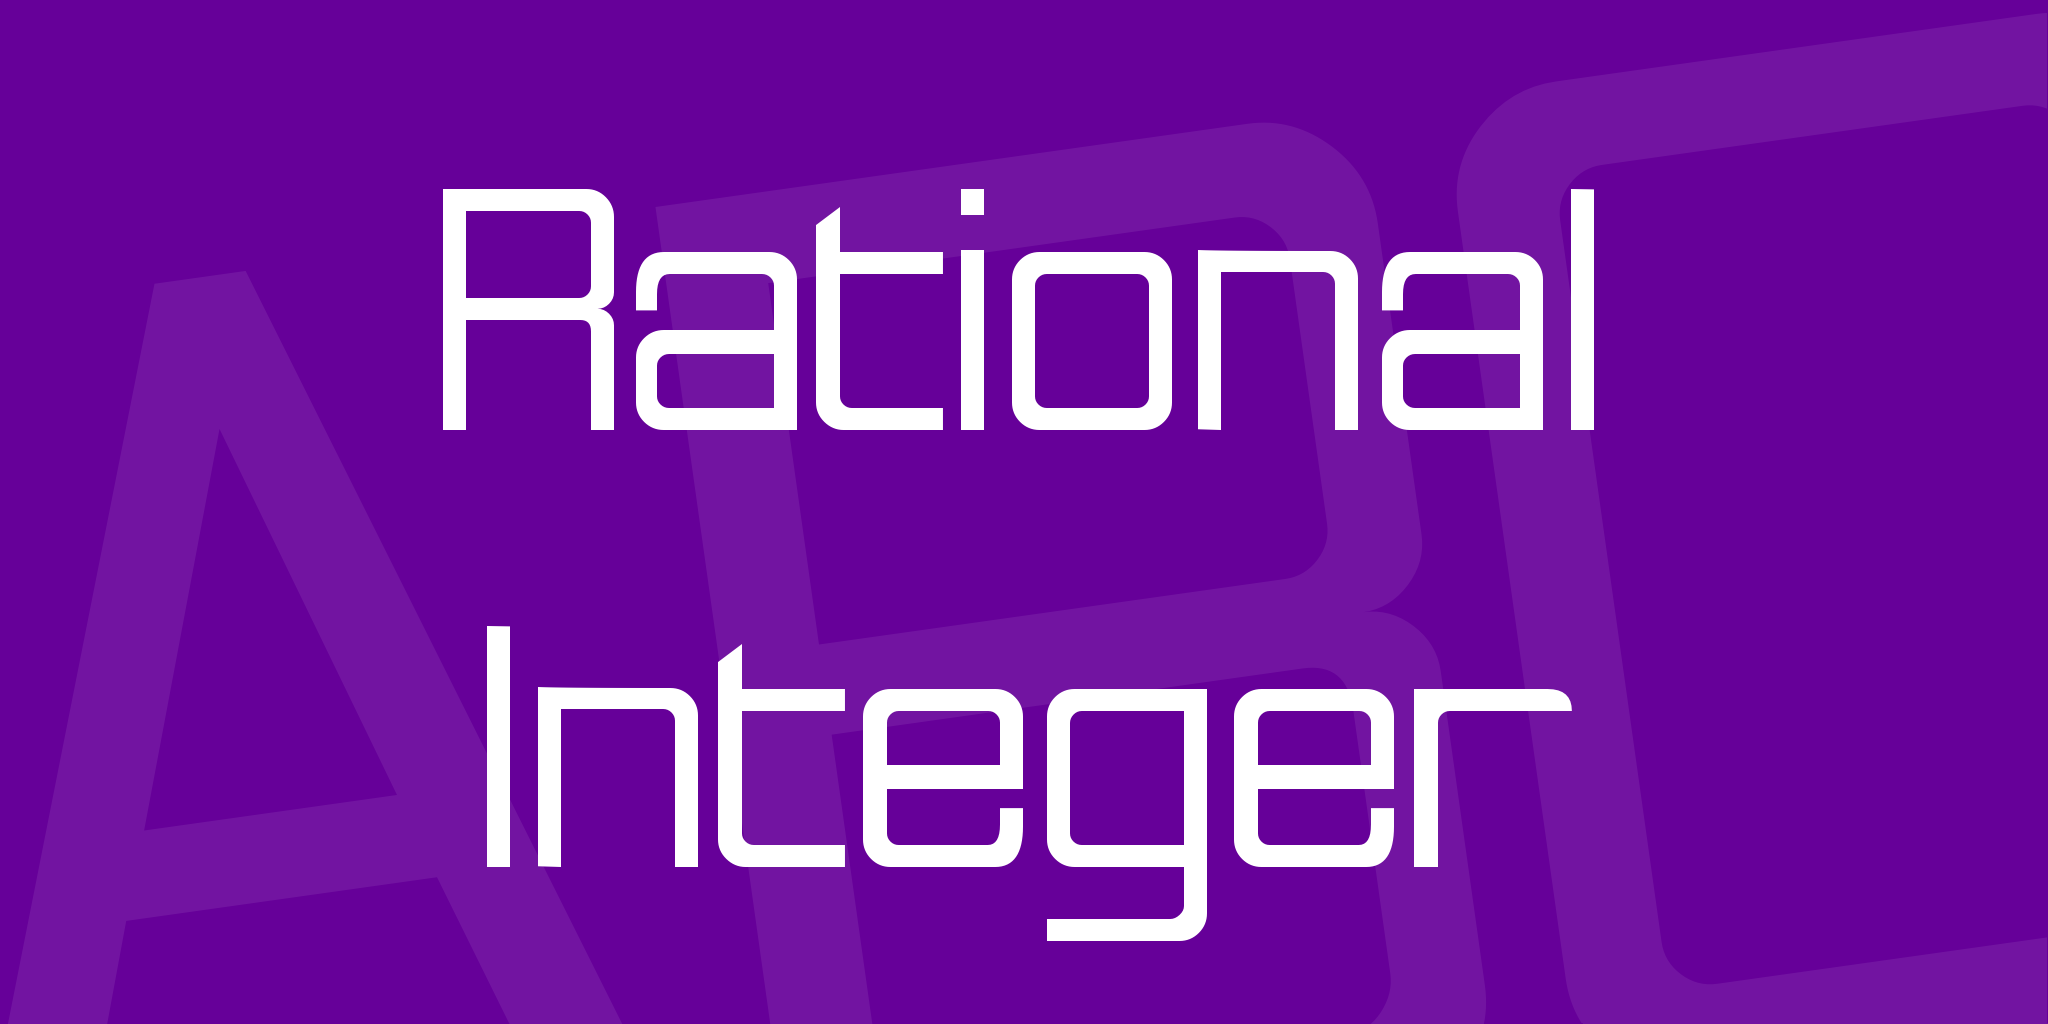 Rational Integer